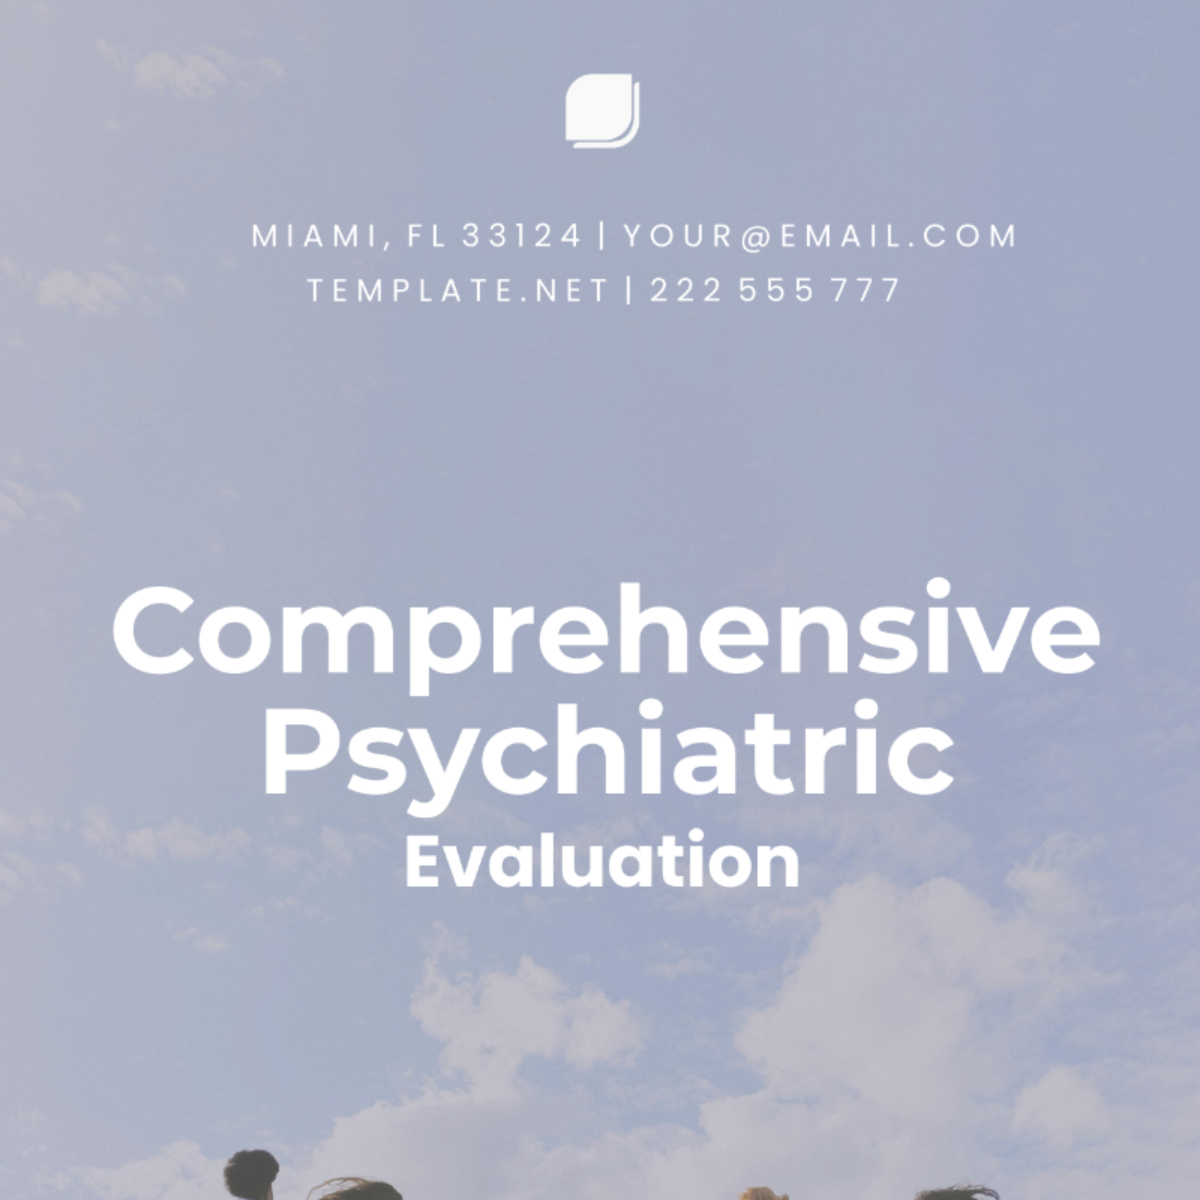 Comprehensive Psychiatric Evaluation Template